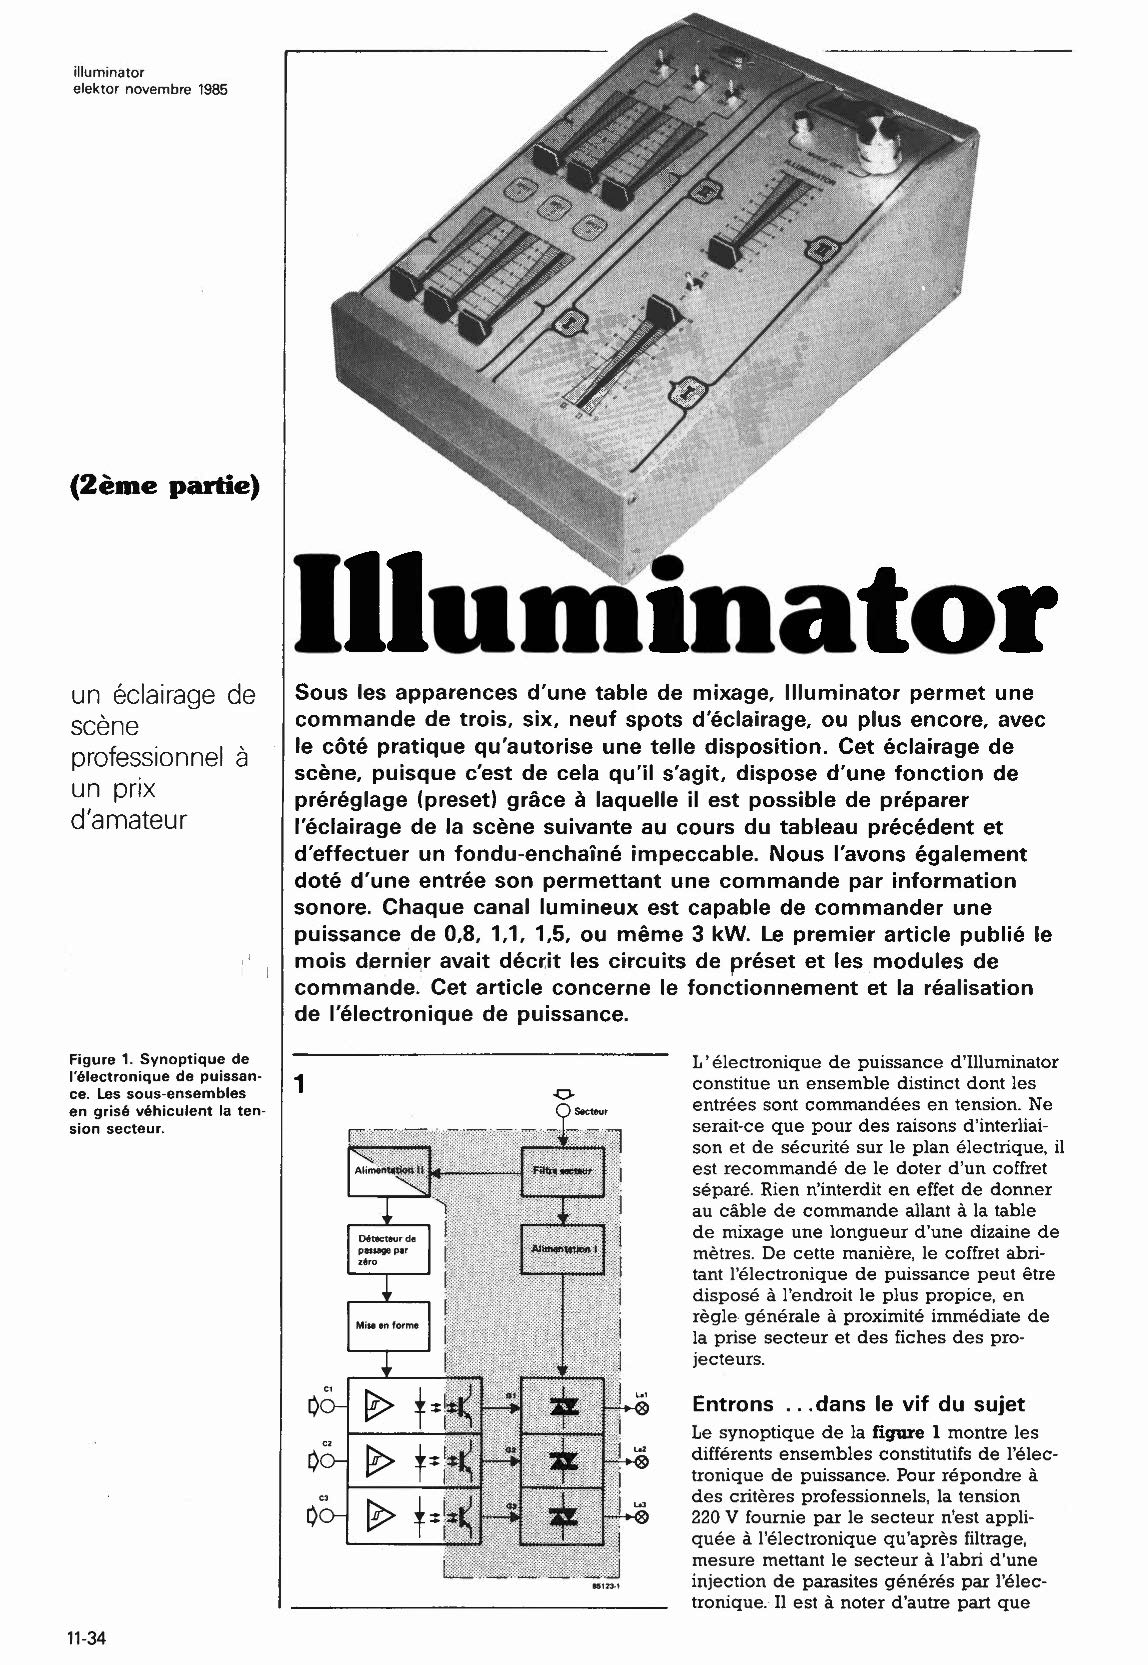 llluminator (2ème parte)